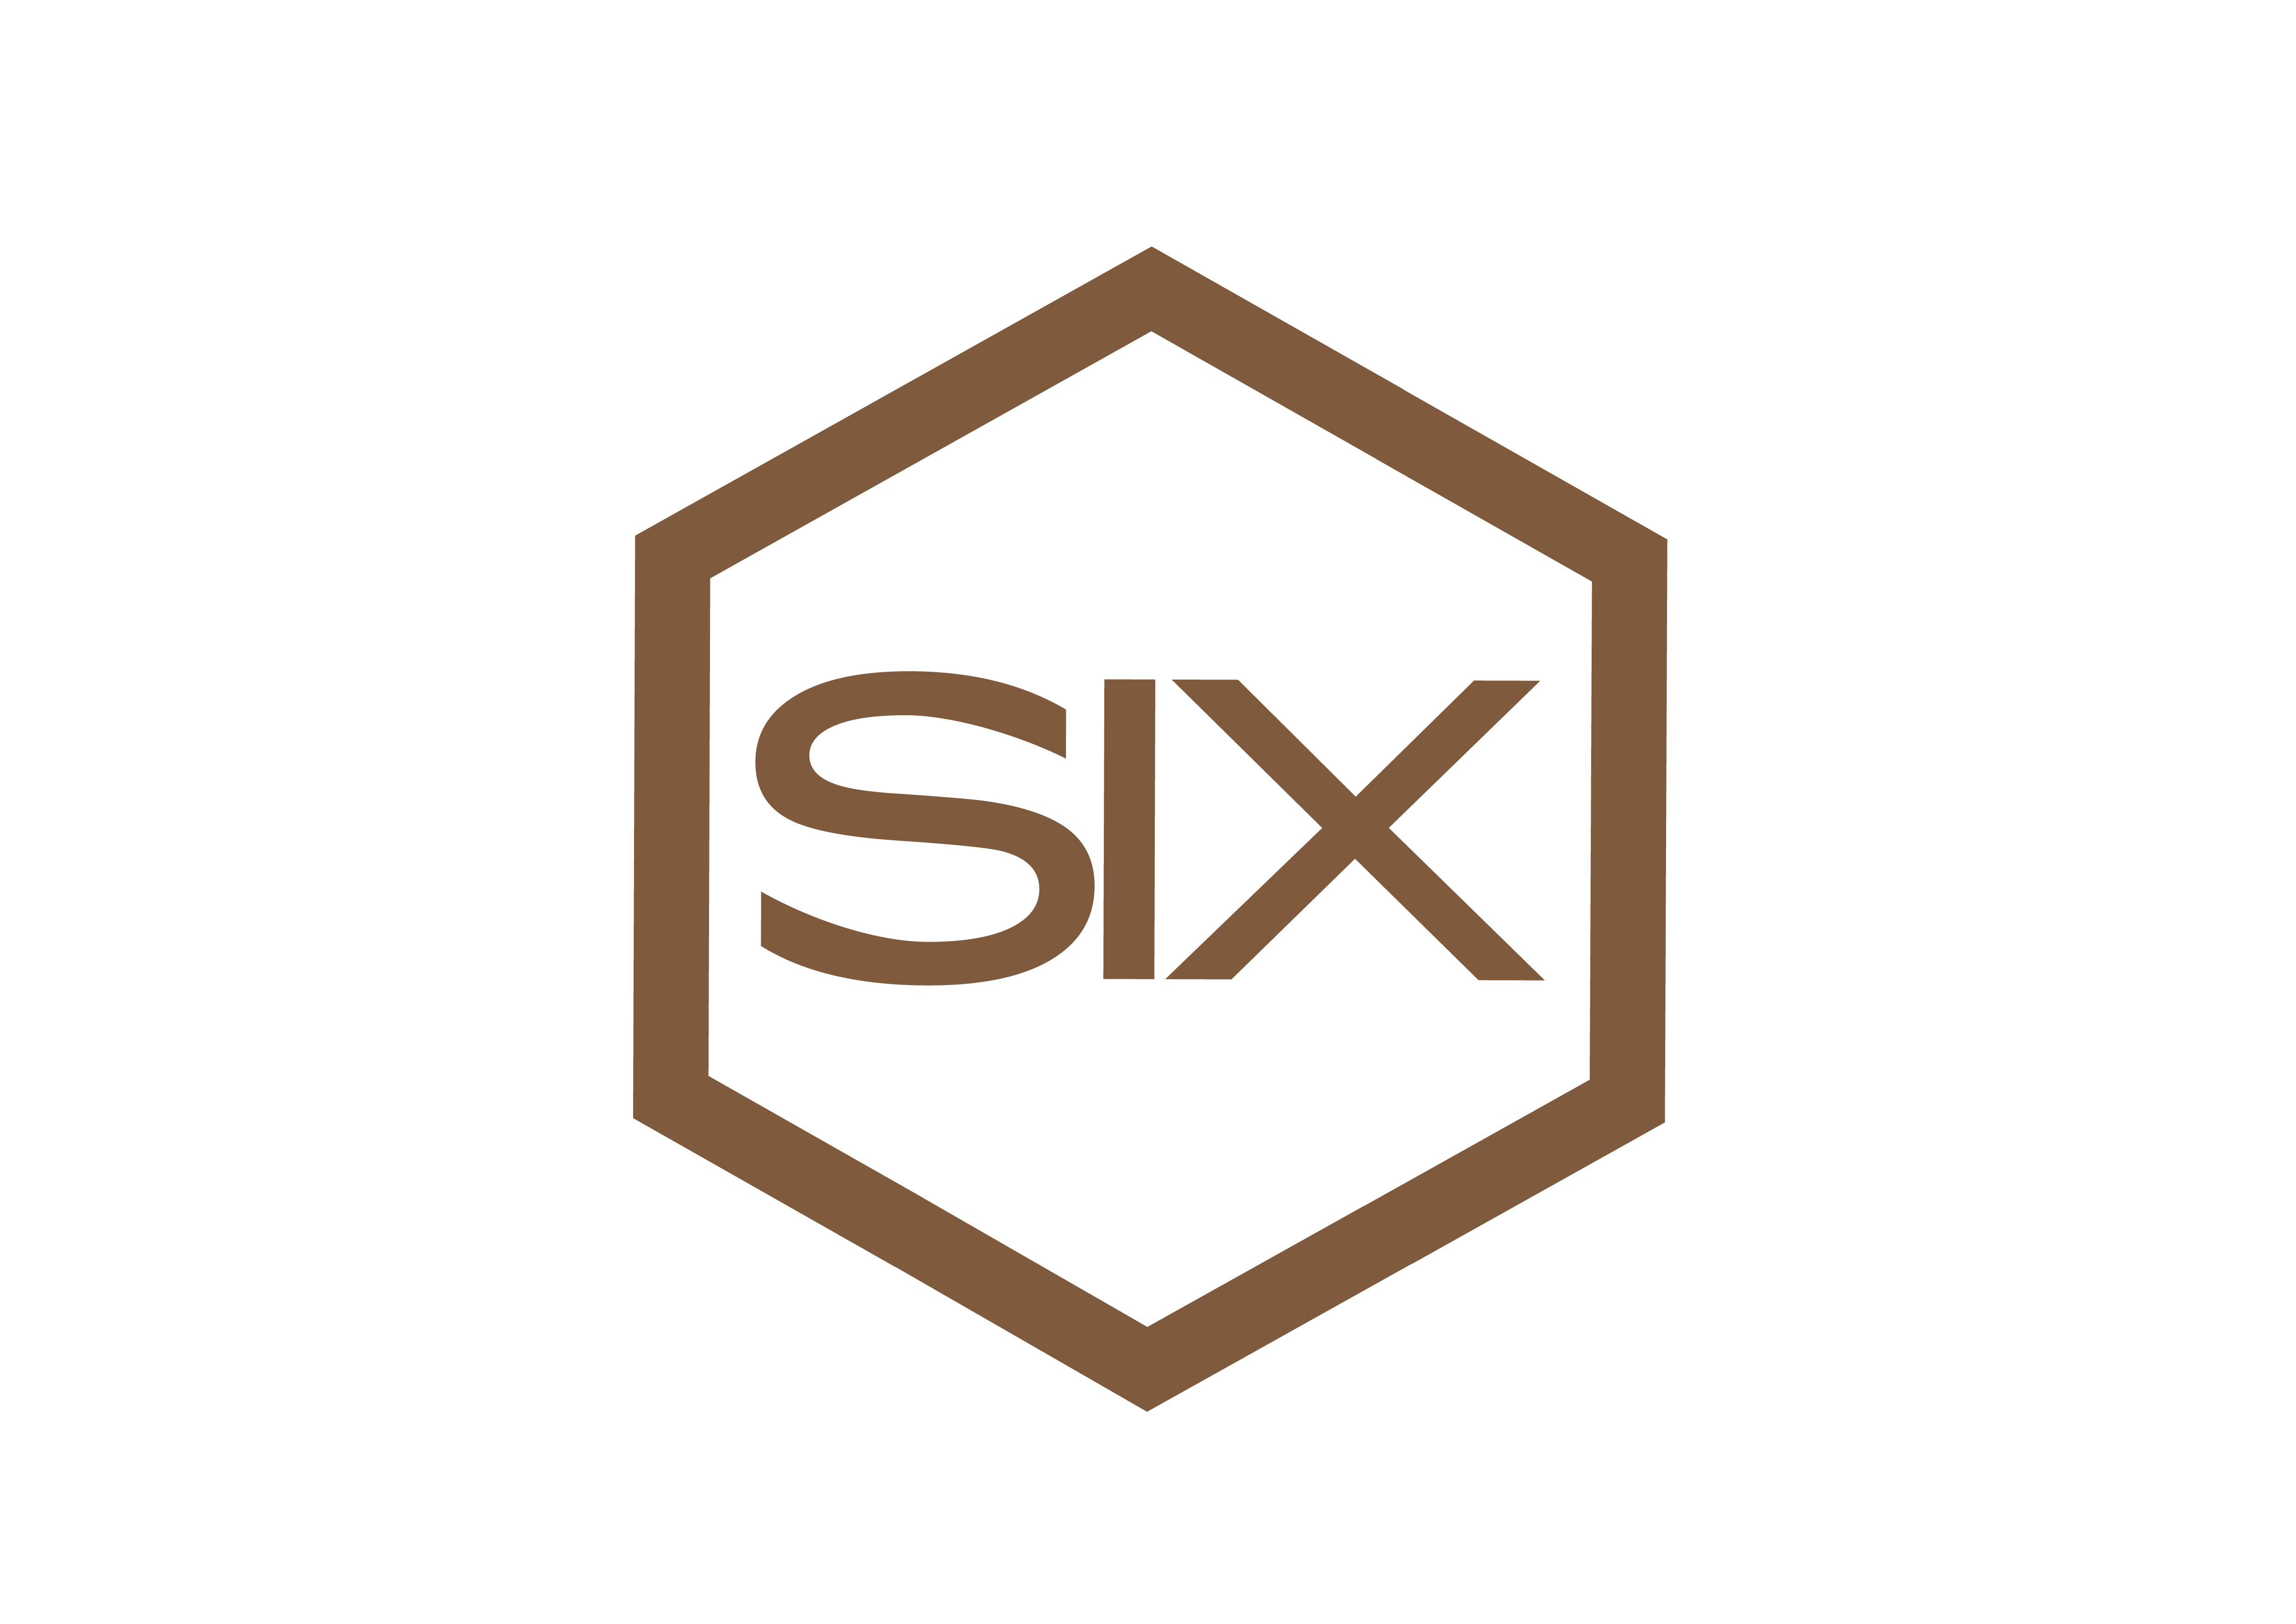 Logo company "Six"